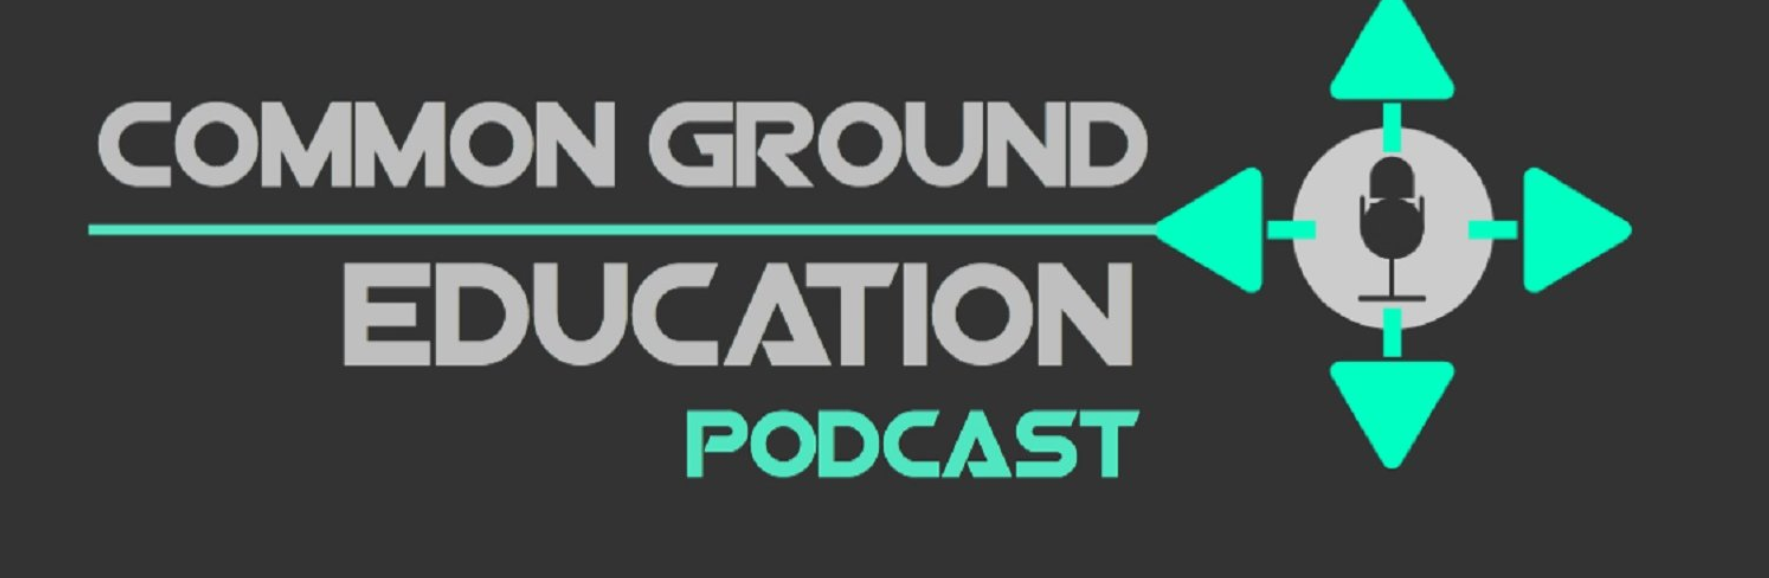 common ground education podcast variquest